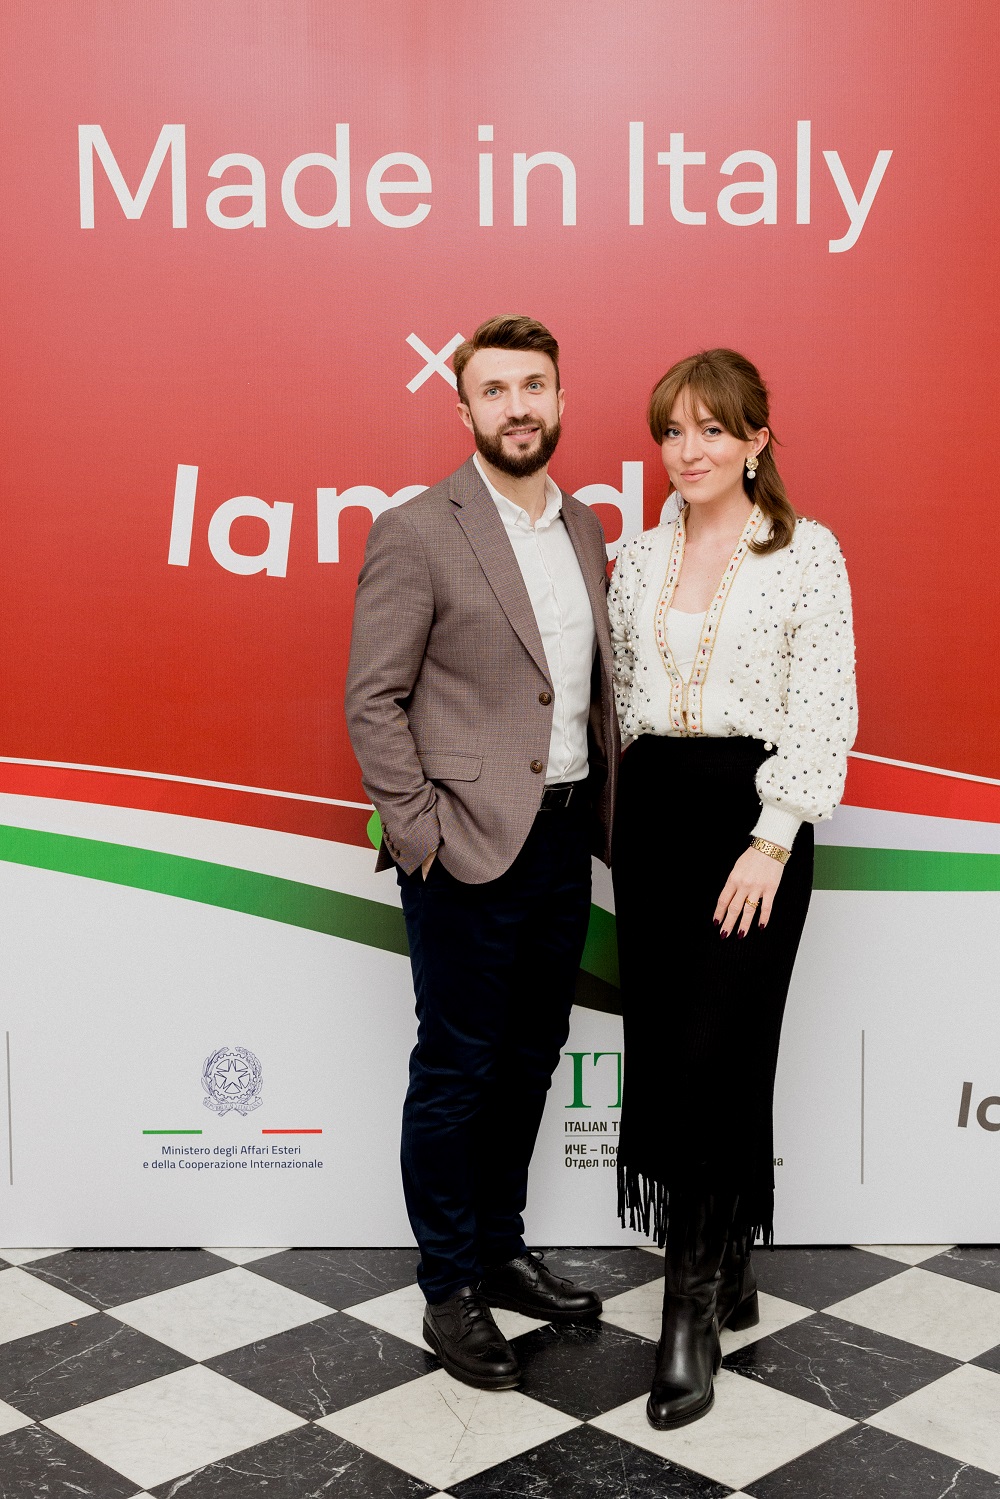 MADE IN ITALY X LAMODA: бранч-презентация нового проекта и его гости